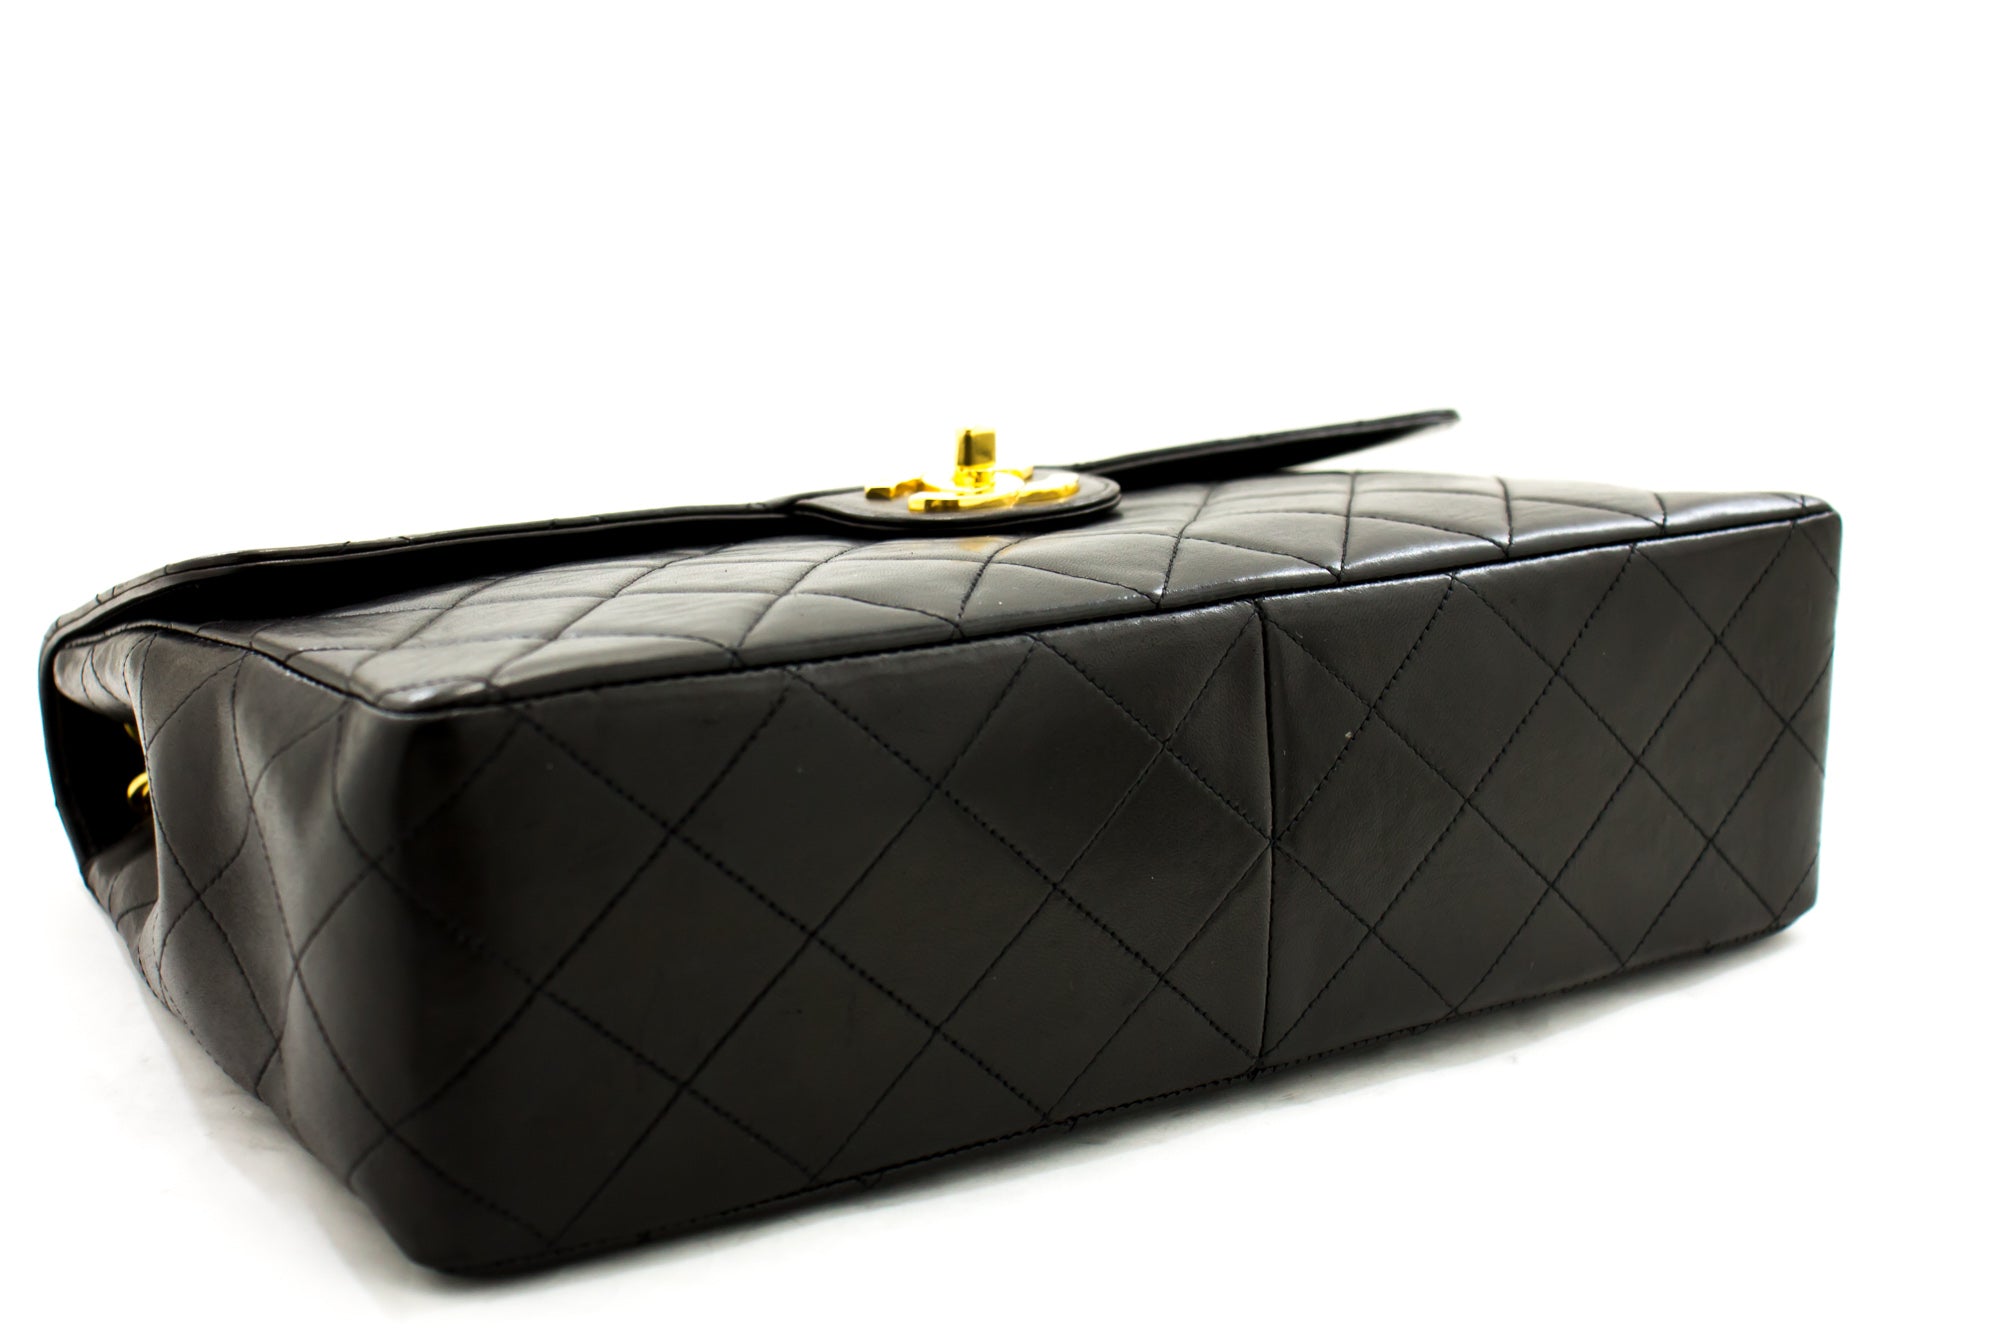 Chanel Jumbo 11 Large Chain Shoulder Bag Flap Black Lambskin Gold F98